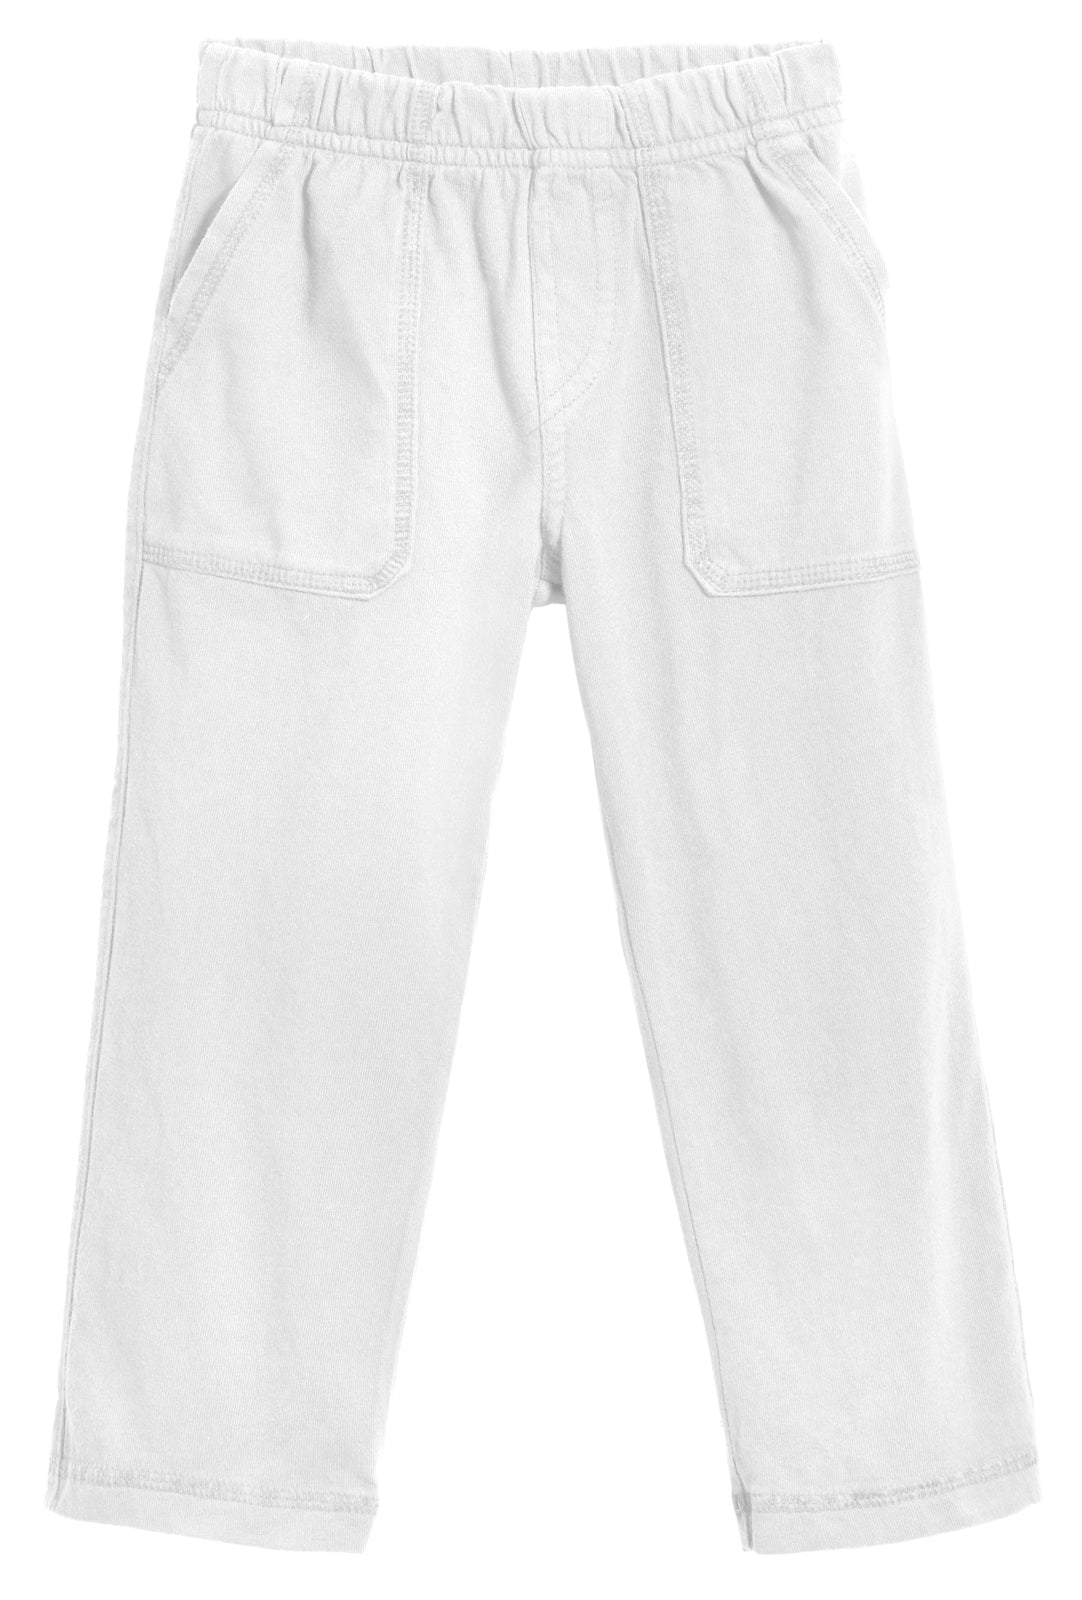 Boys Soft Cotton Athletic Pants - UPF 50+